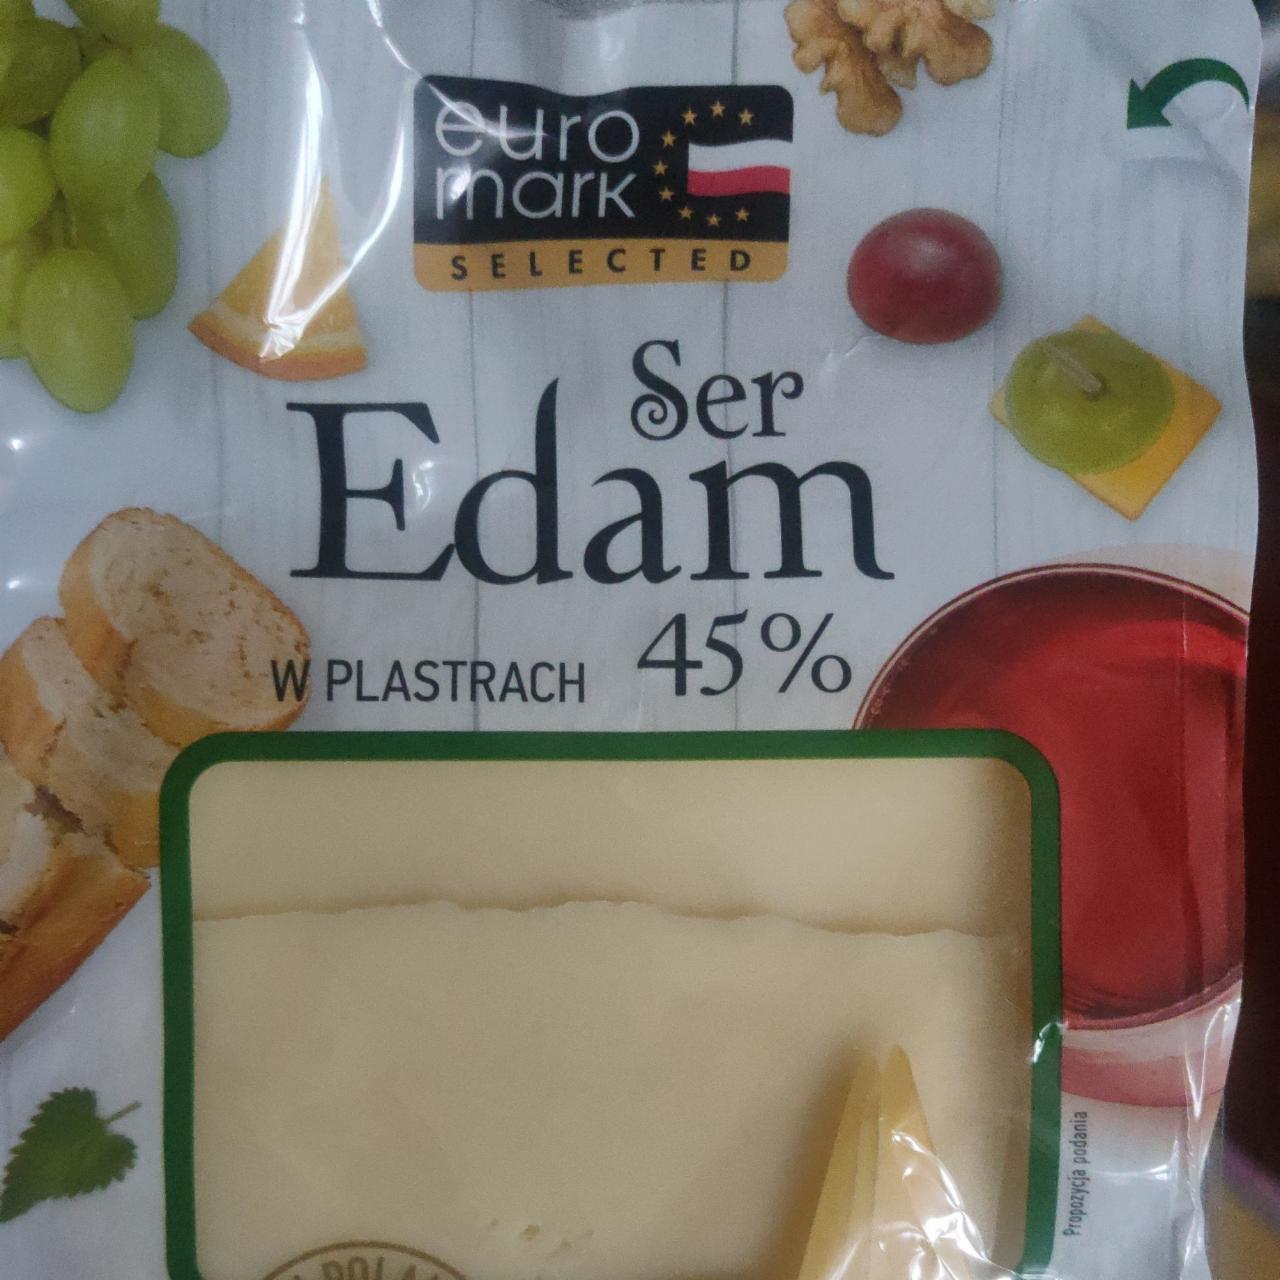 Фото - Сир напівтвердий Едам 45% Euromark